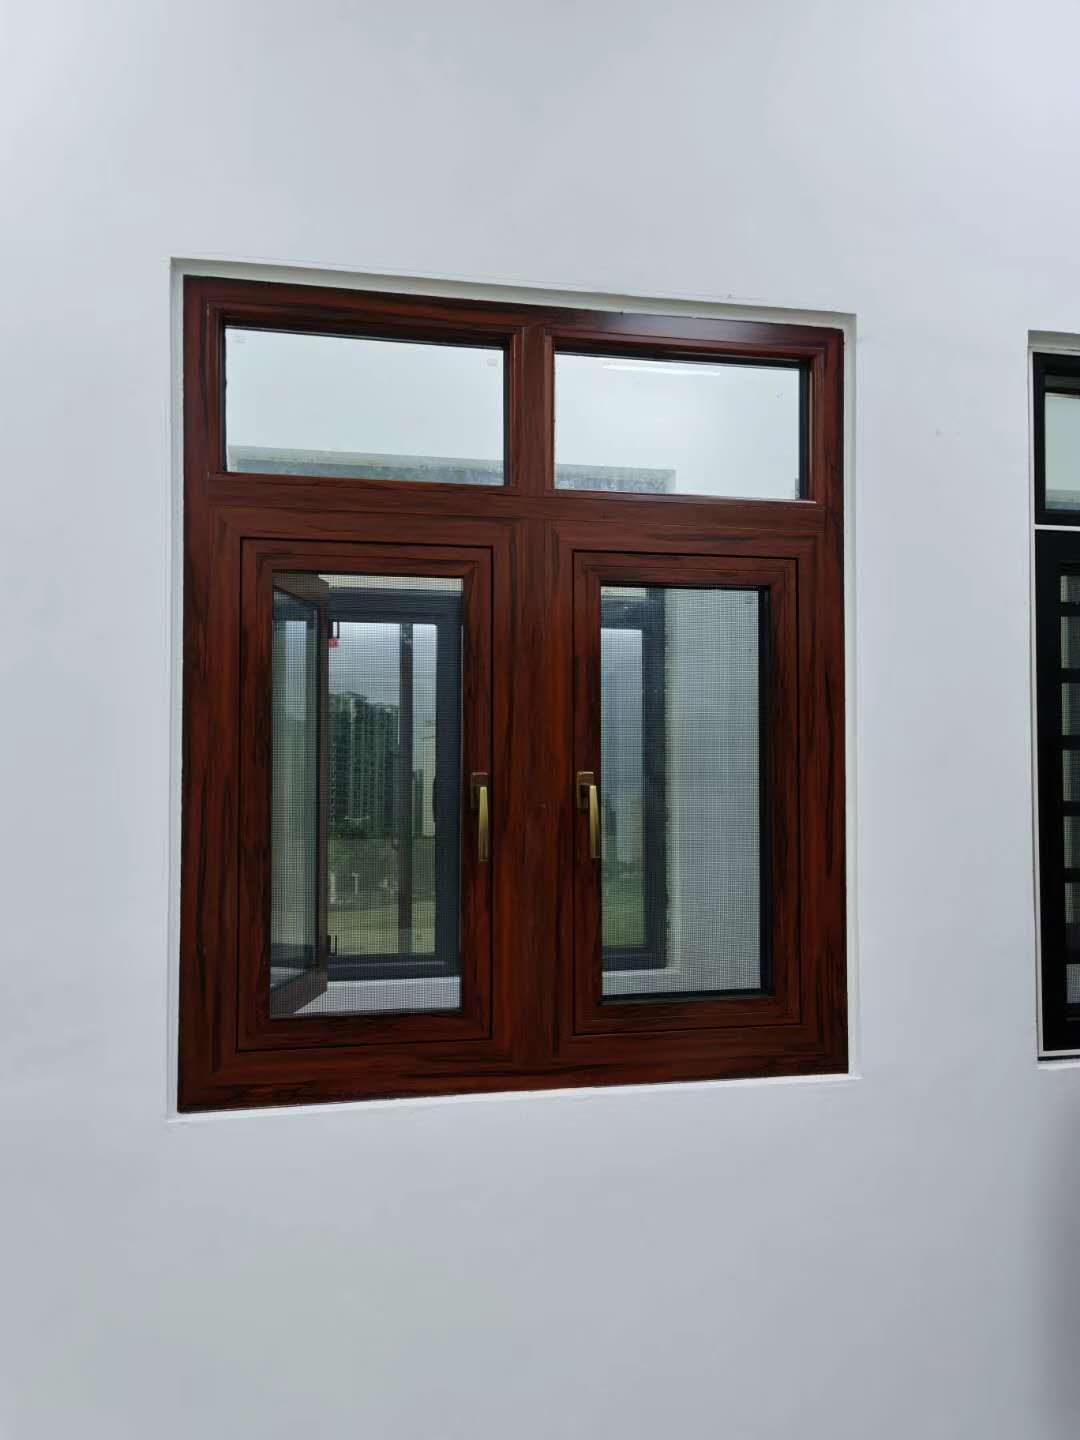 Screen window integrated series Wood Grain Transfer casement window